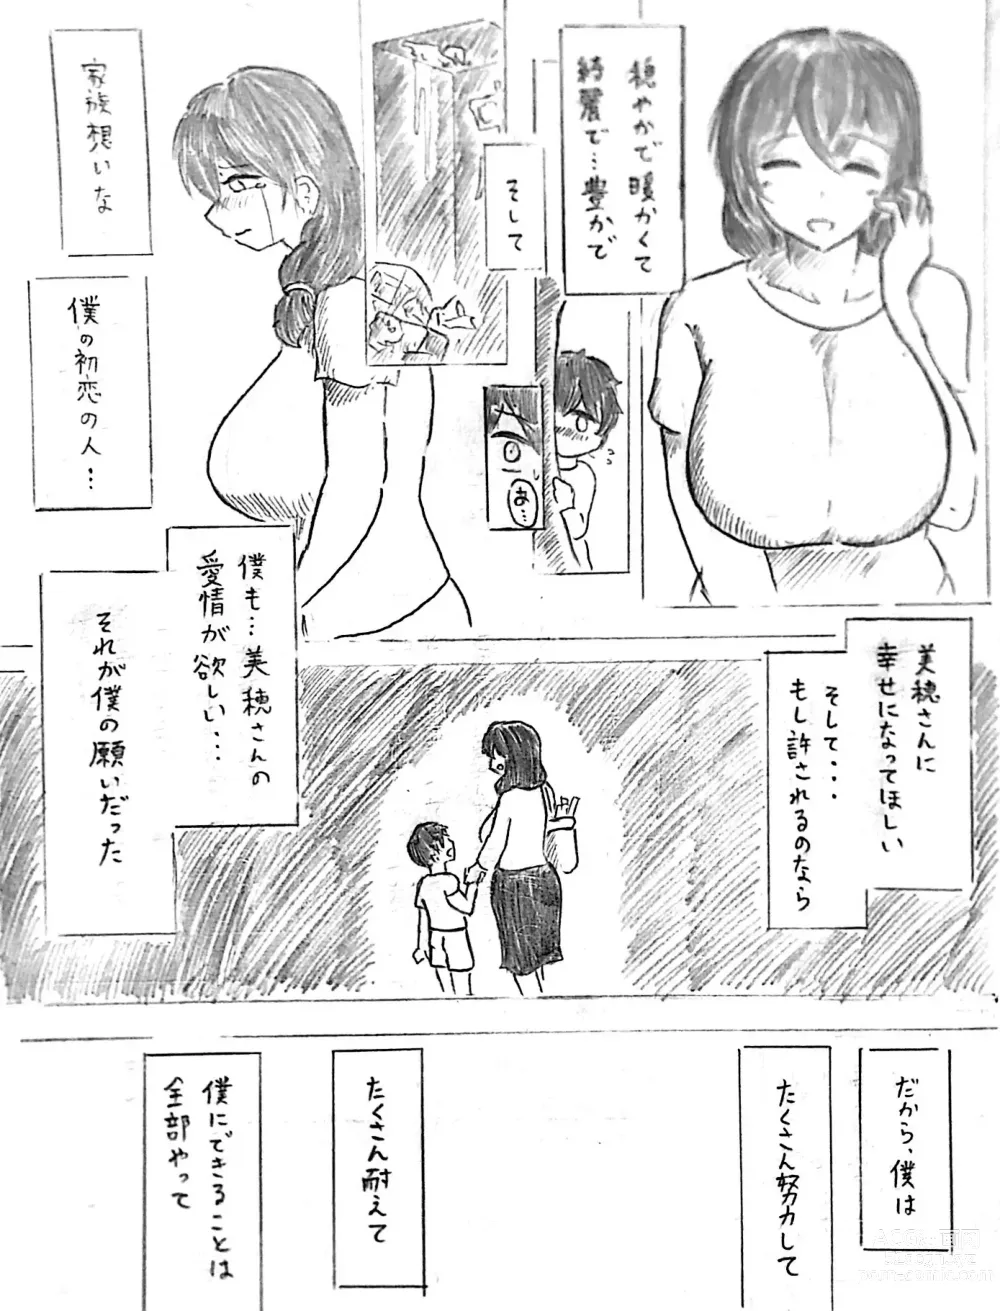 Page 7 of doujinshi Harayome no Mura Sonogo